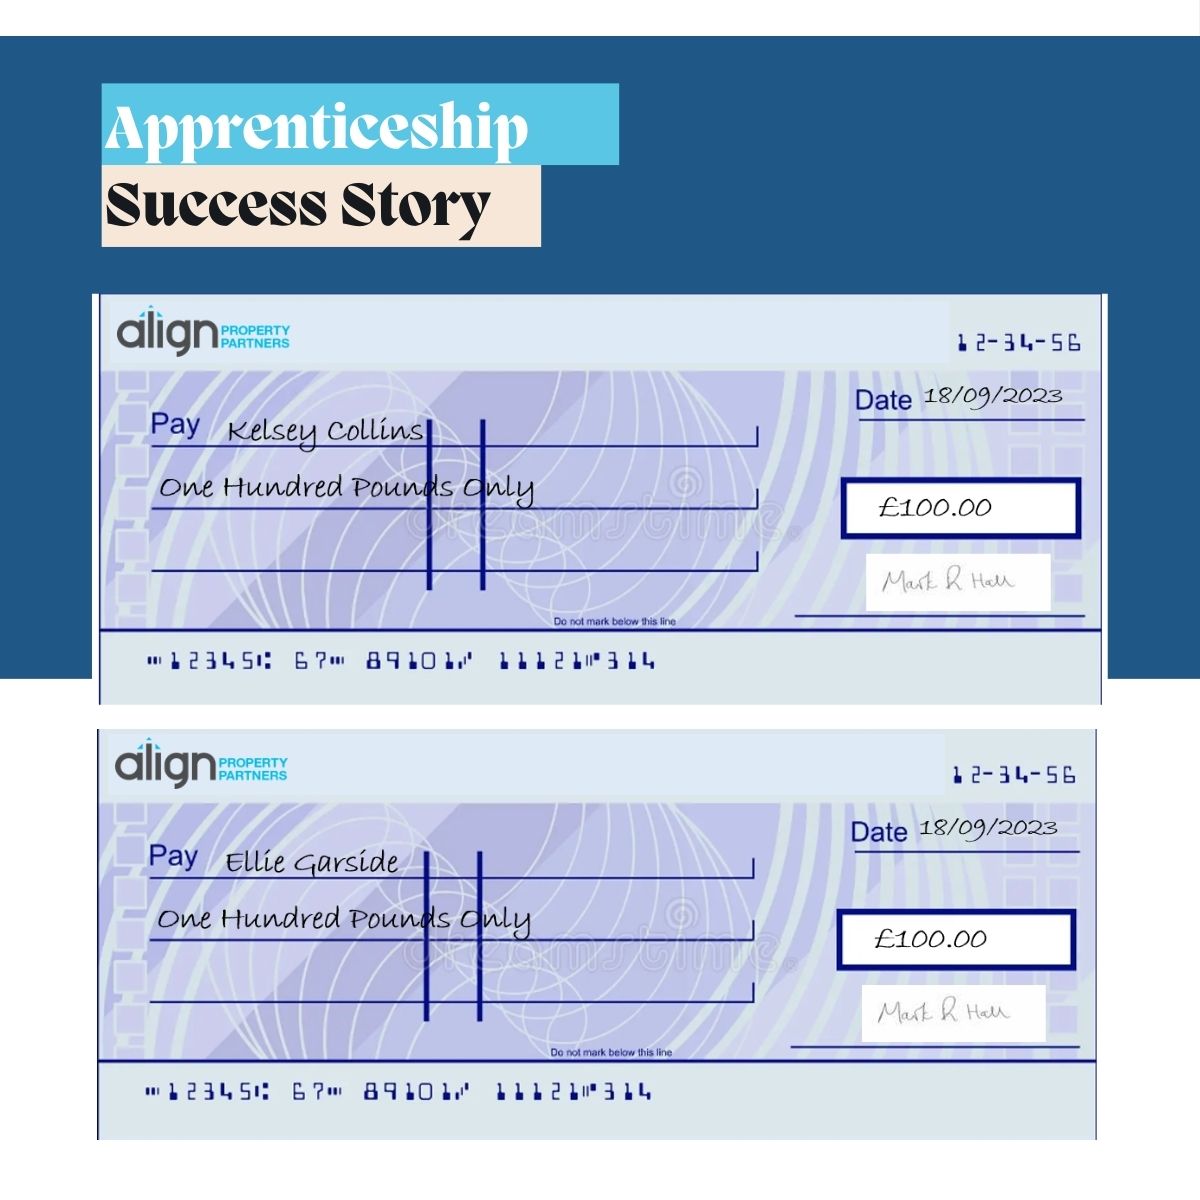 News Story - Apprenticeship Success Story